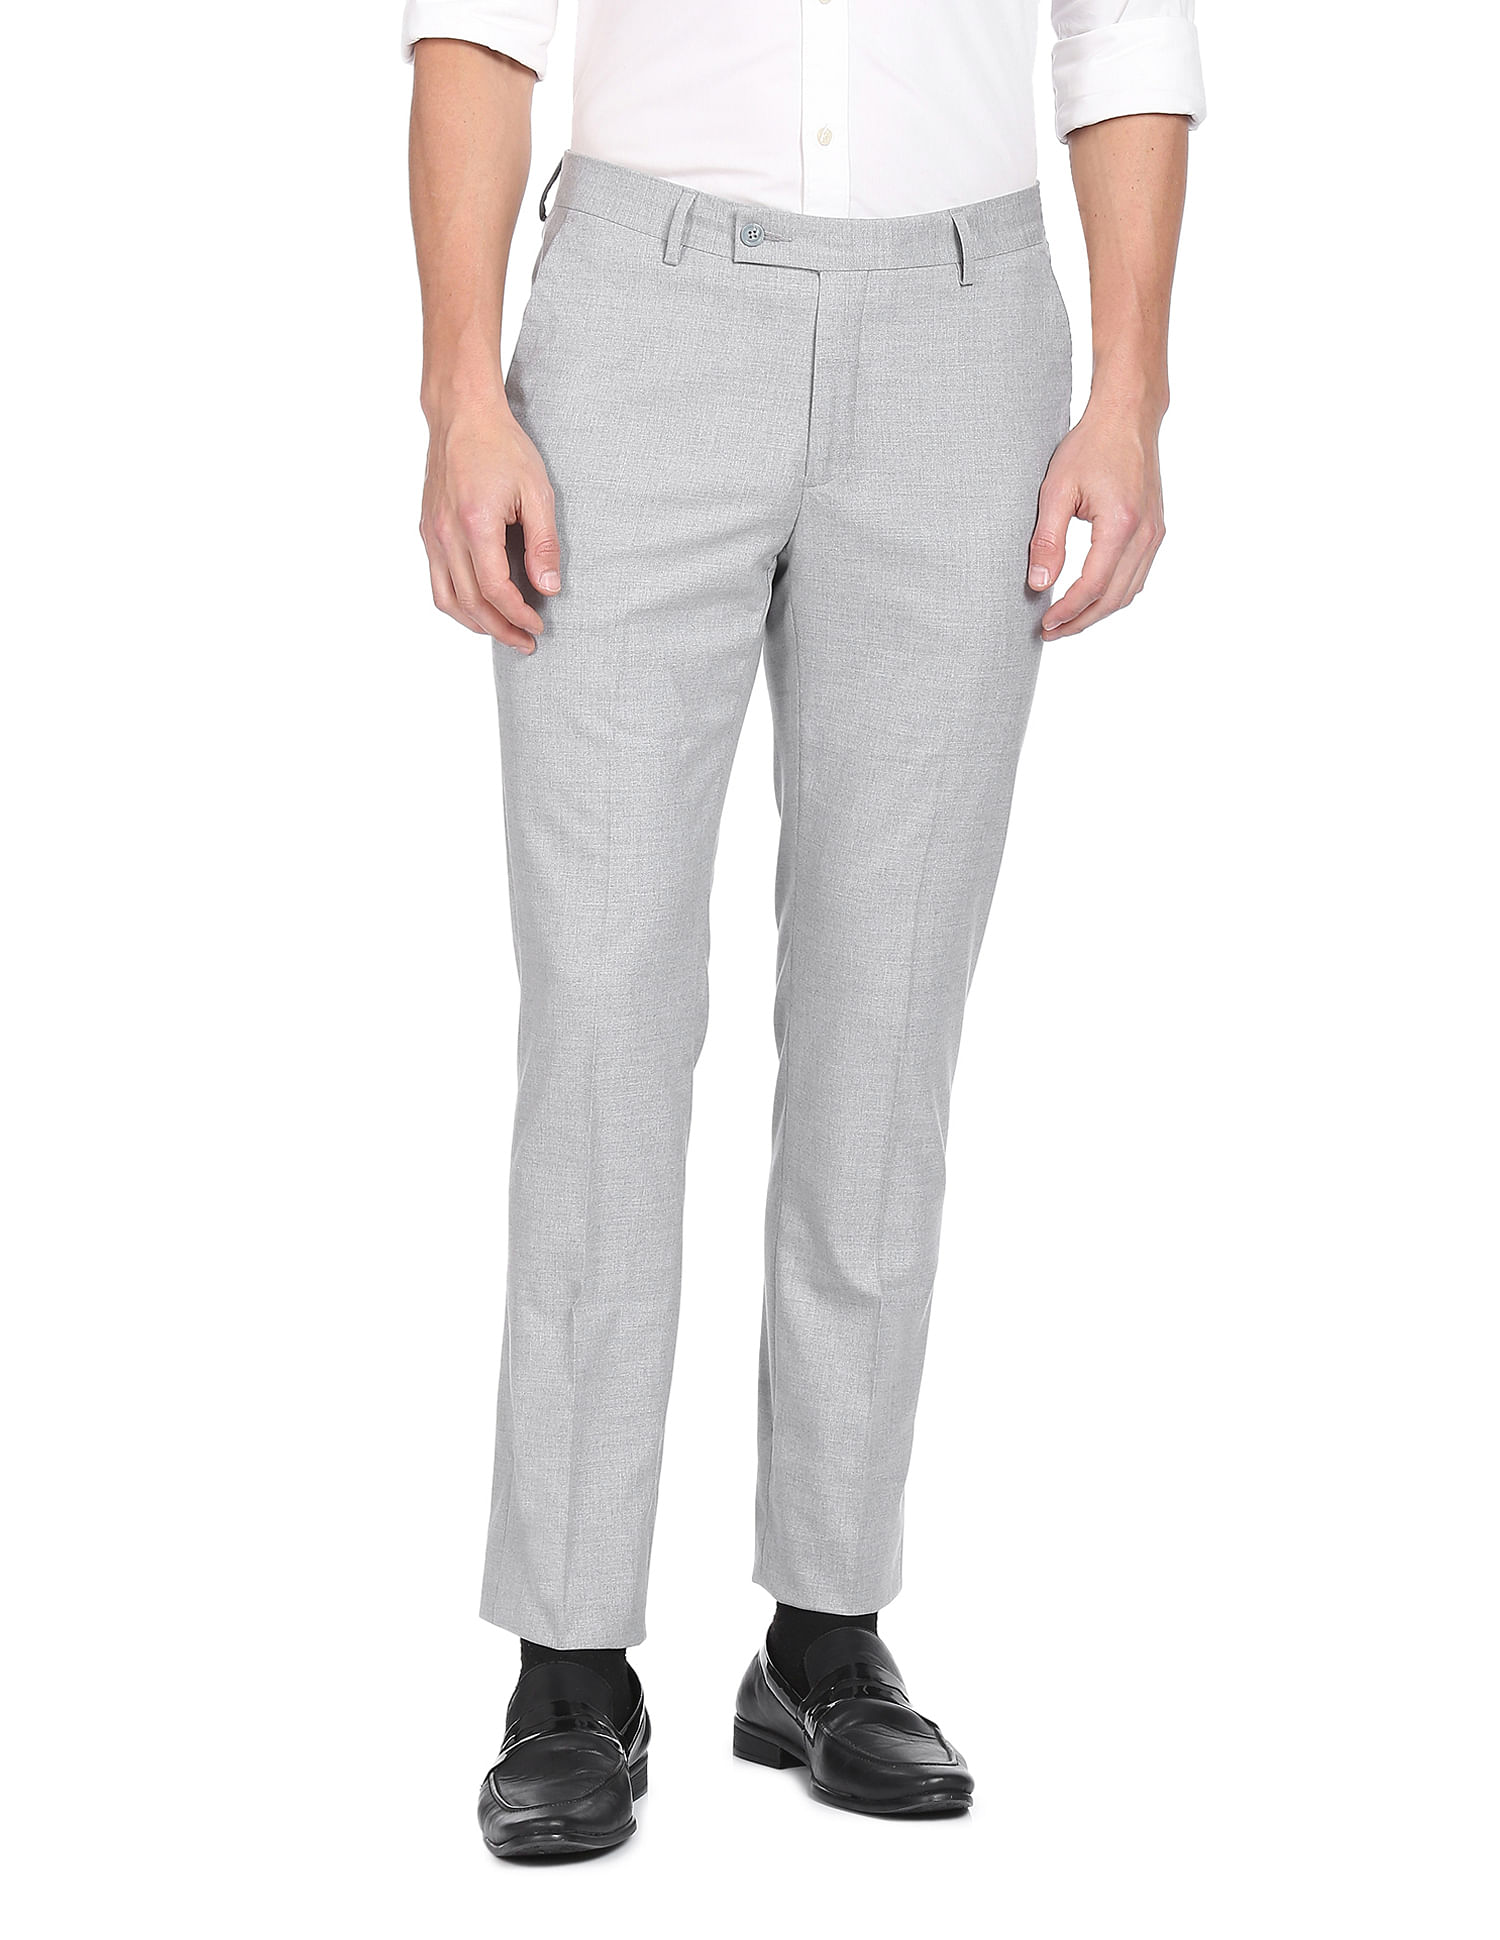 Mens Modern Trousers / Neutral Grey Wool Pants / Asymmetrical Trousers /  Drop Crotch Mens Pants / Urban Clothing by POWHA 